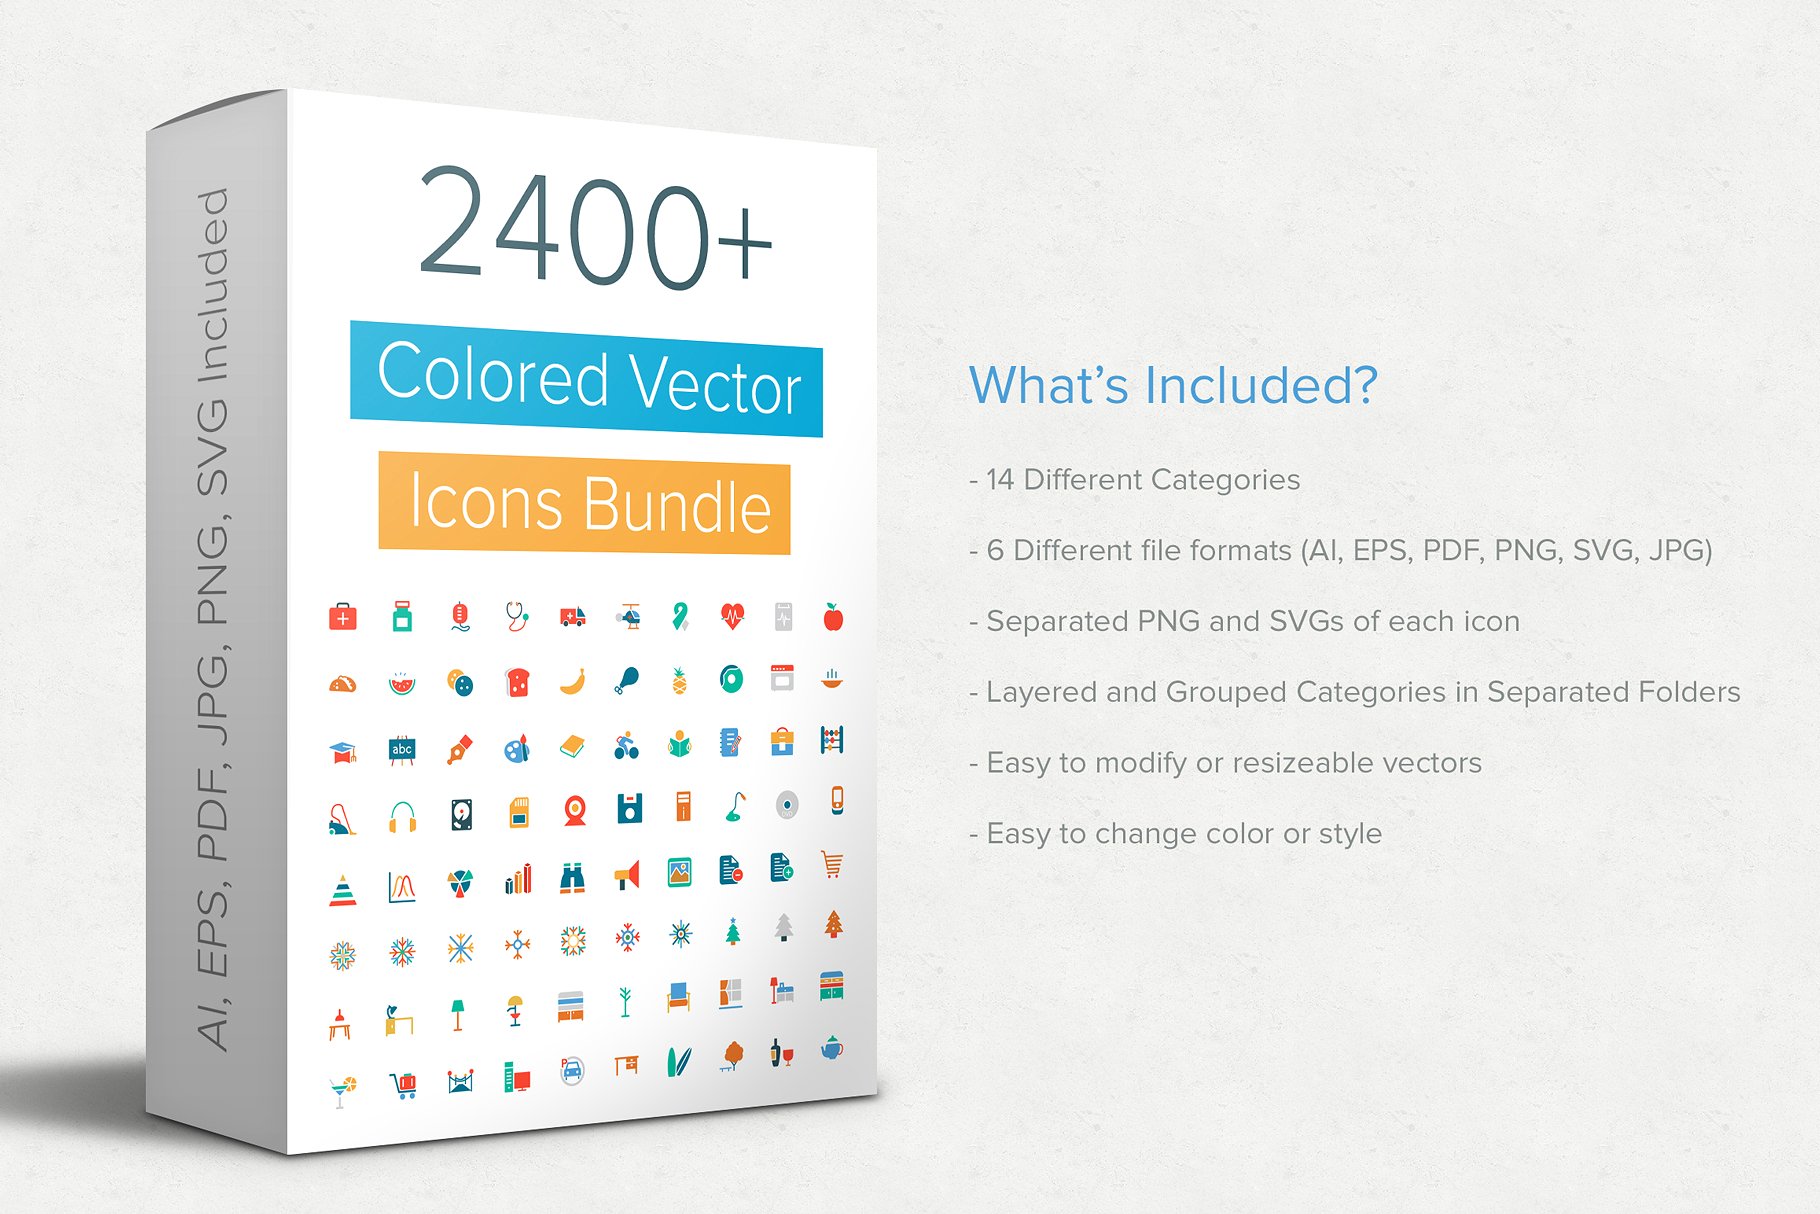 2400+彩色矢量图标 2400+ Colored Vector Icons Bundle插图